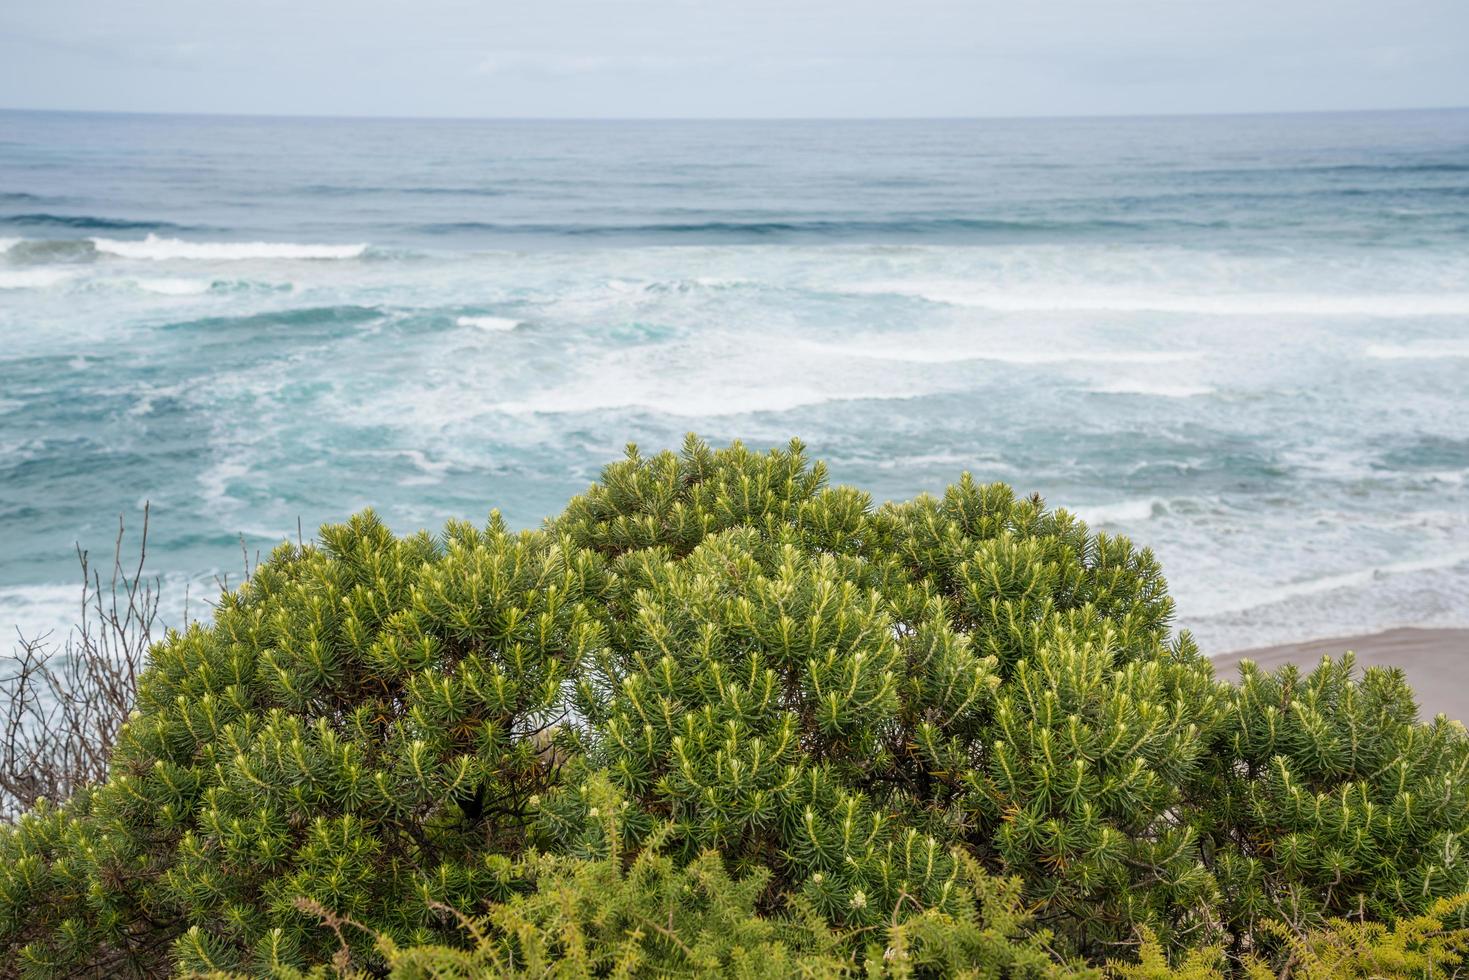 Scenery view of the ocean in the Great Ocean Road, Australia. photo